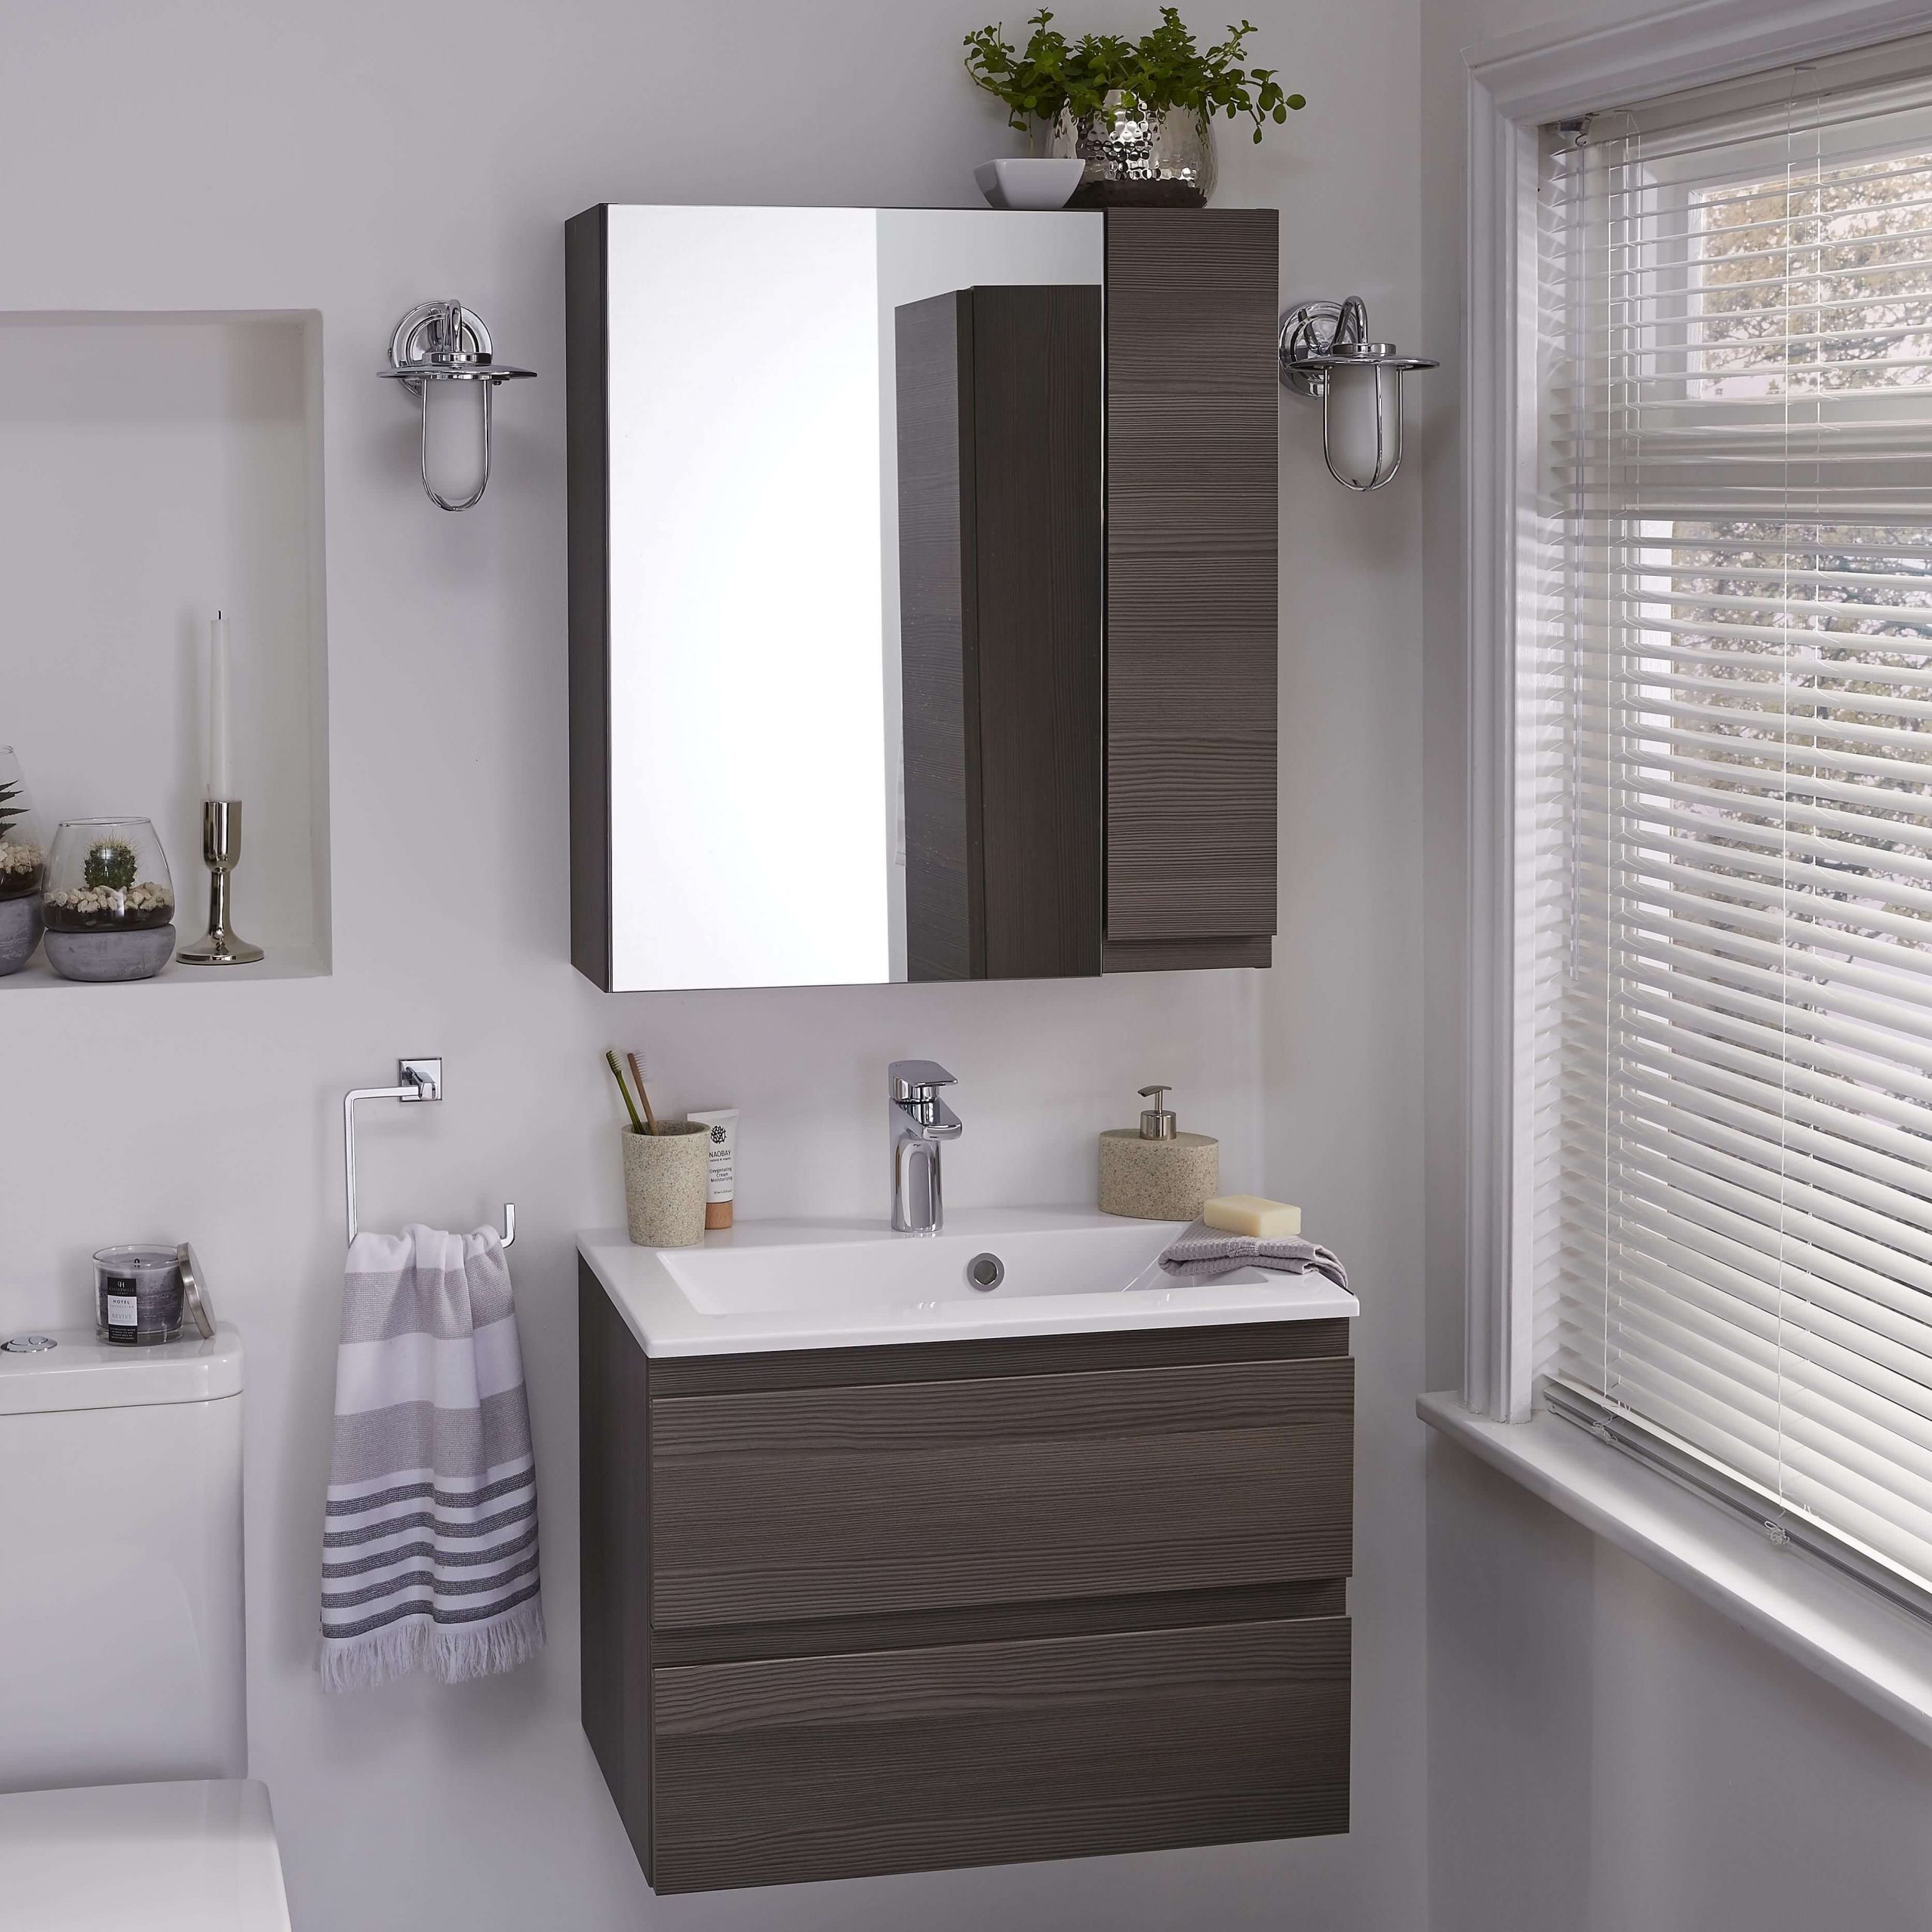 Small Bathroom Cabinet Ideas
 15 Clever Small Bathroom Cabinet Ideas